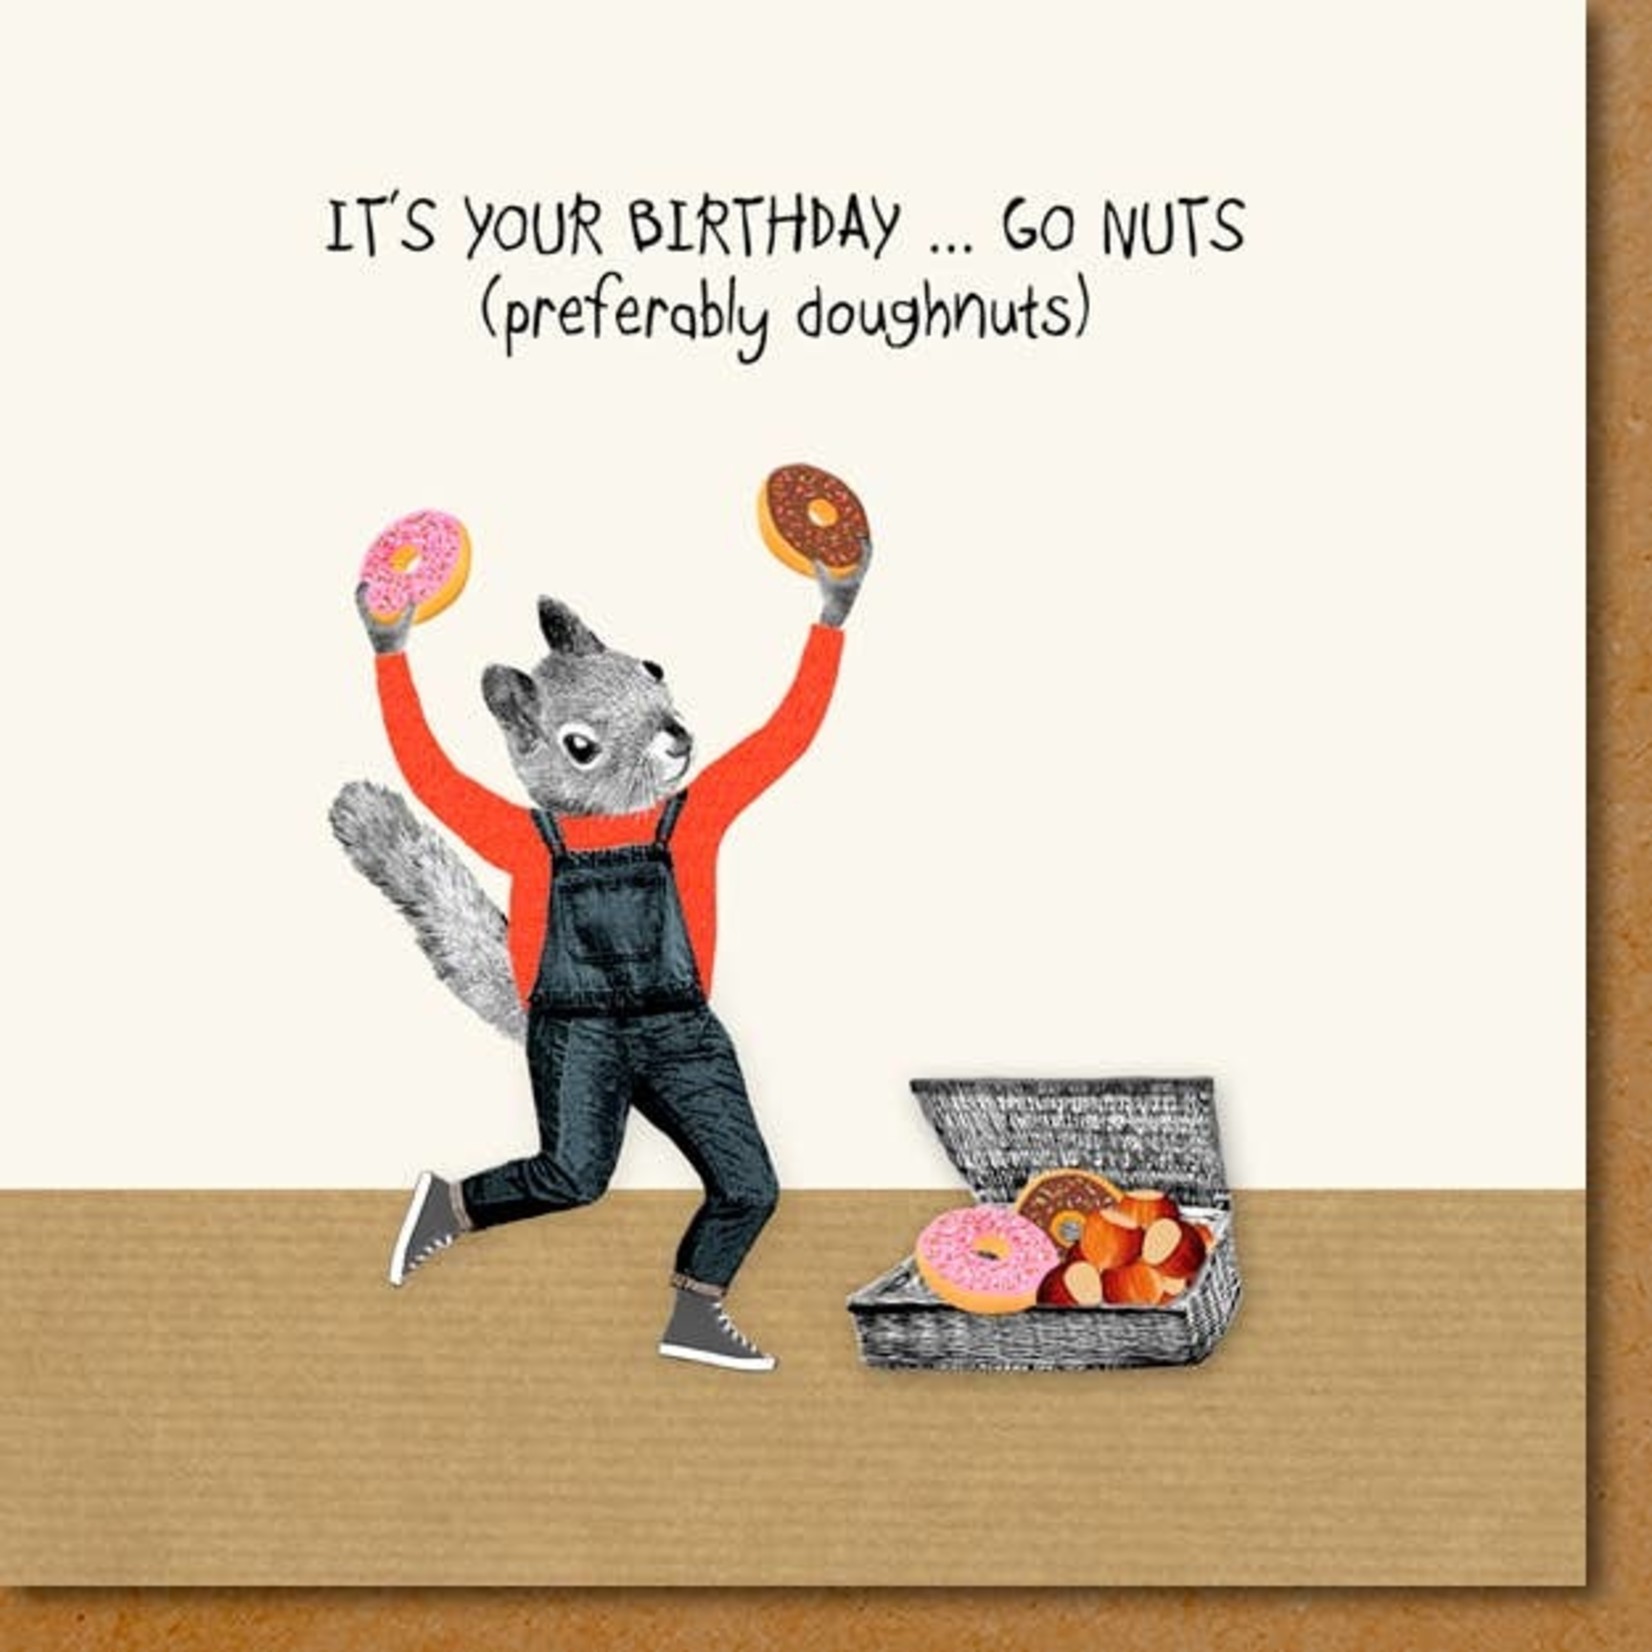 Greeting Cards - Birthday Go Nuts Preferably Doughnuts Birthday